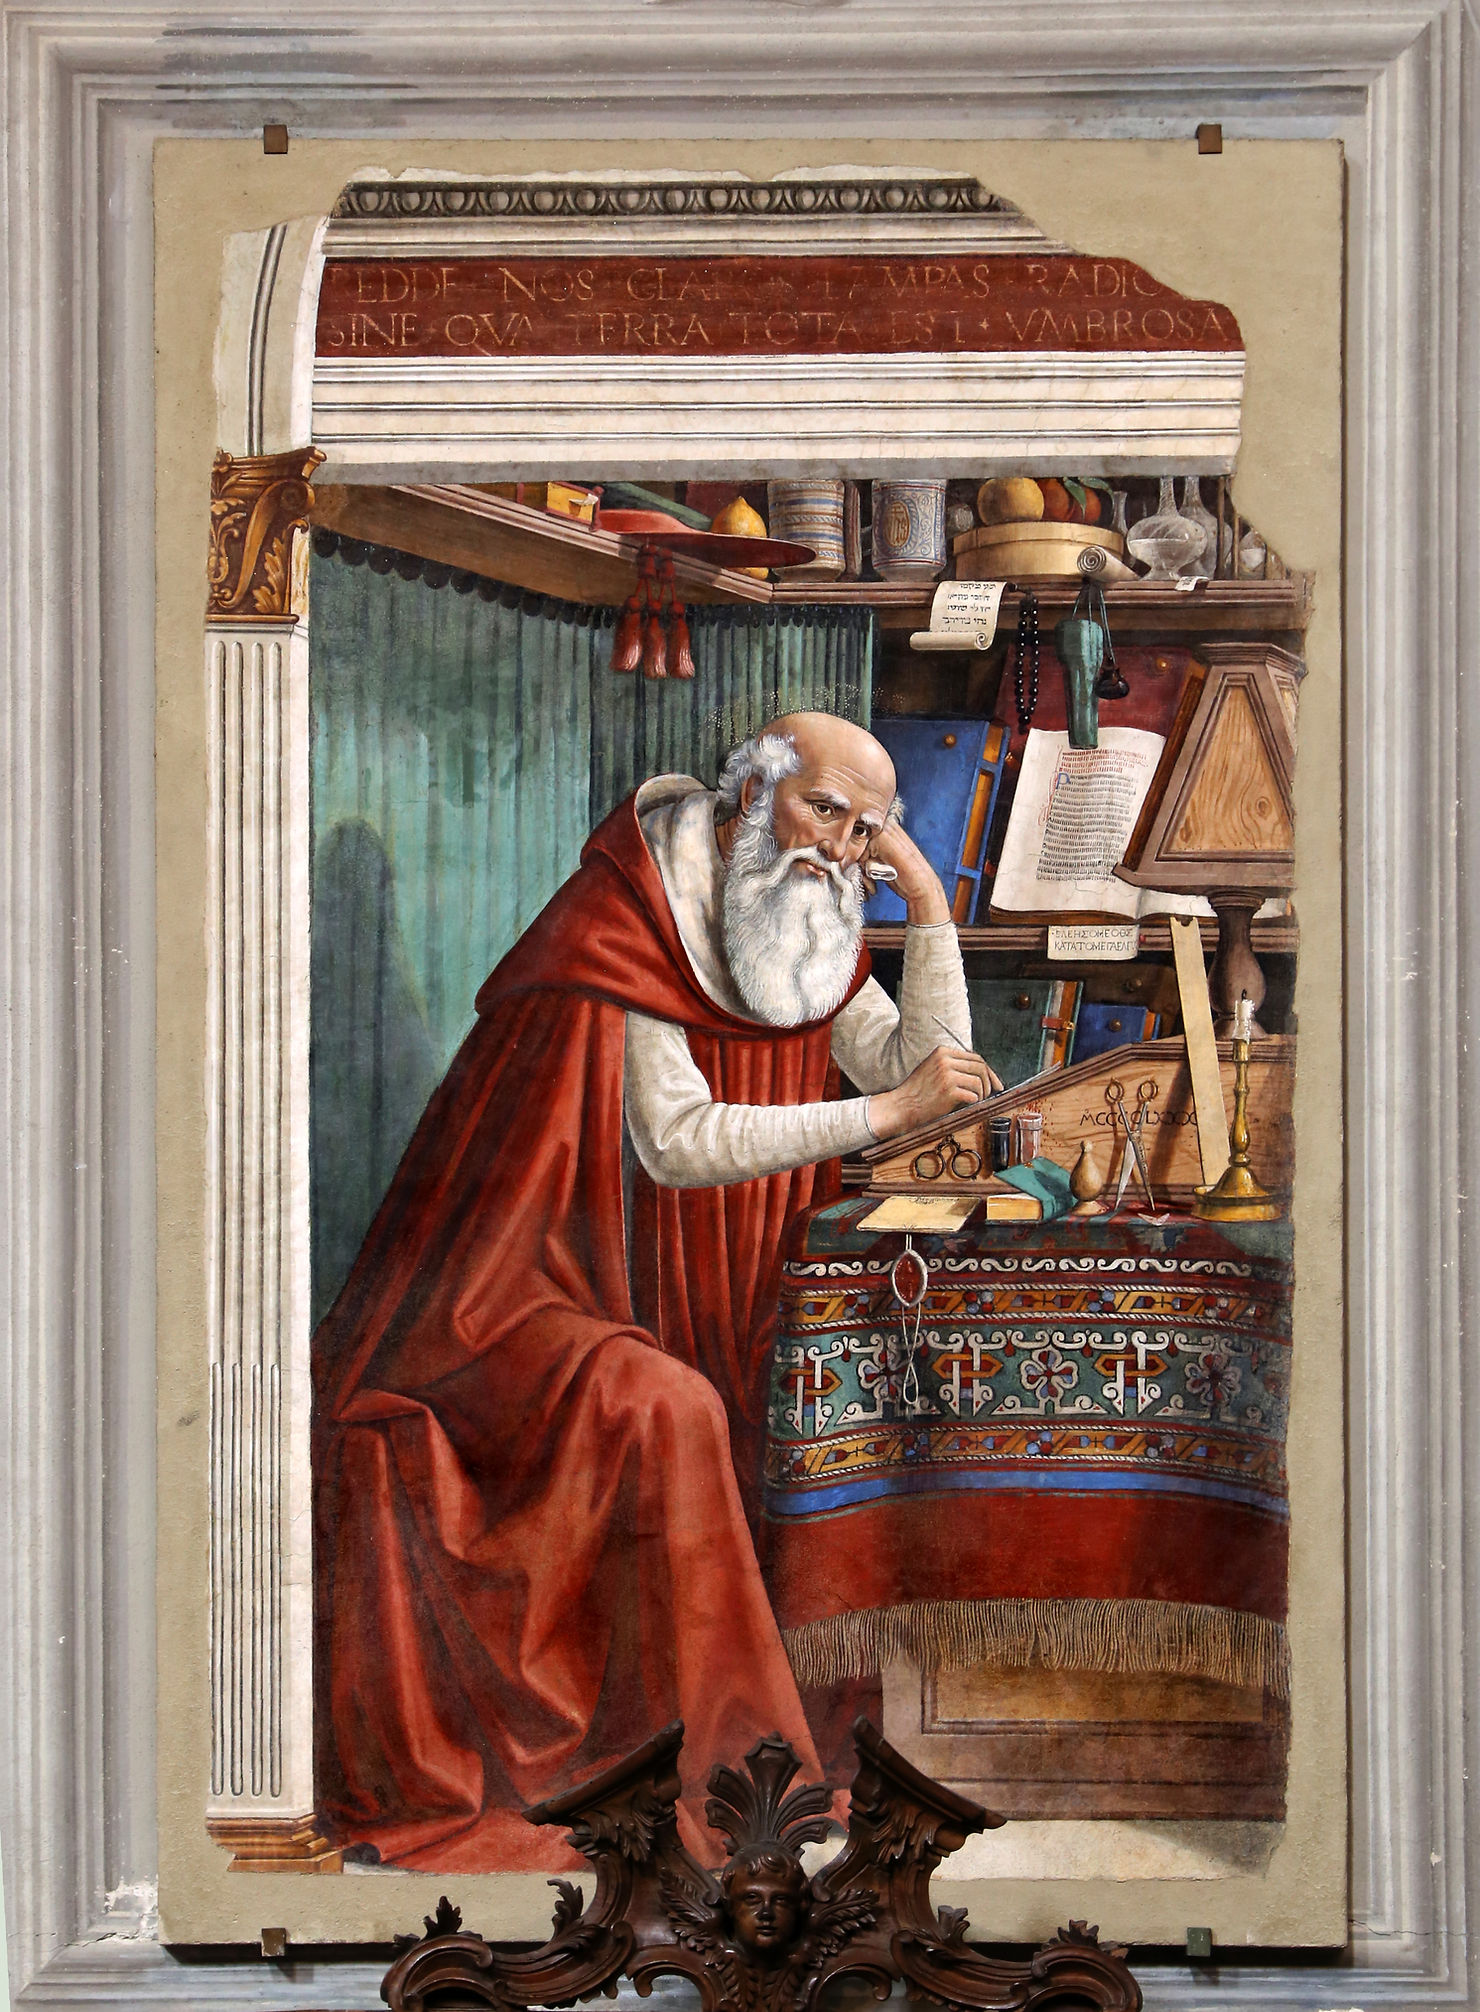 Domenico Ghirlandaio "San Girolamo nello studio" 1480, affresco cm 184x119, Chiesa di Ognissanti, Firenze.